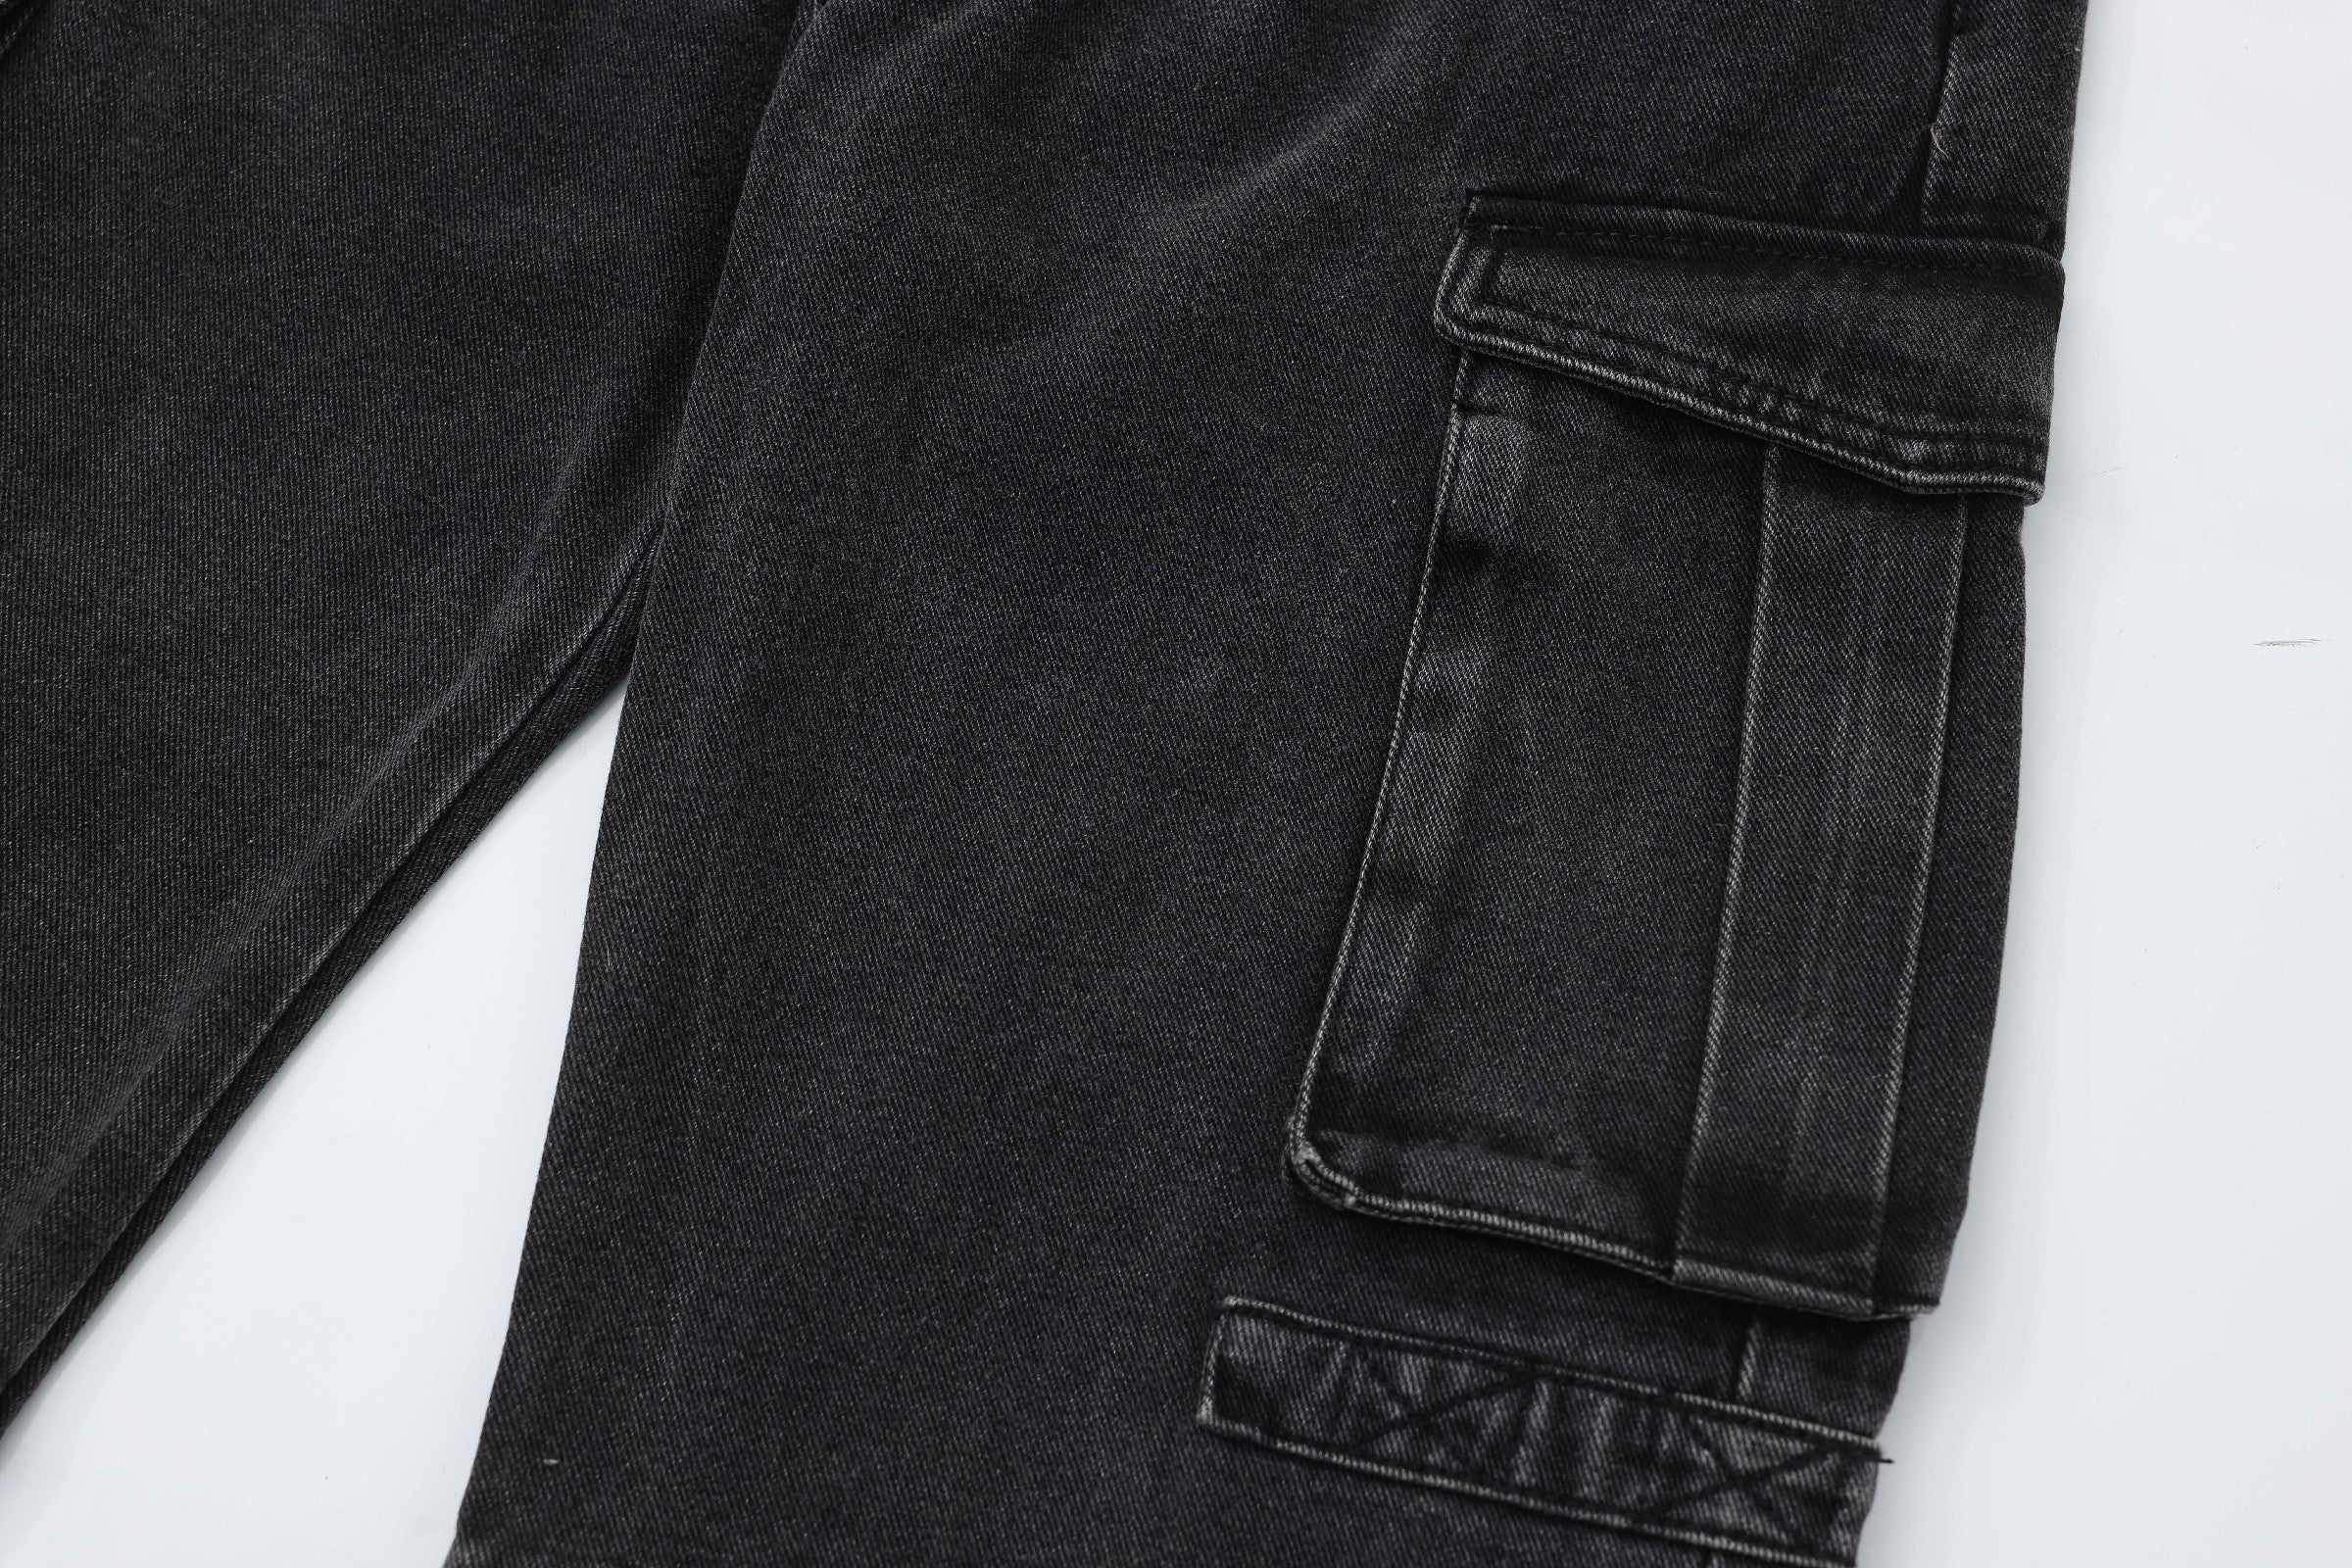 'Buttoned Pocket' Jeans - Santo 